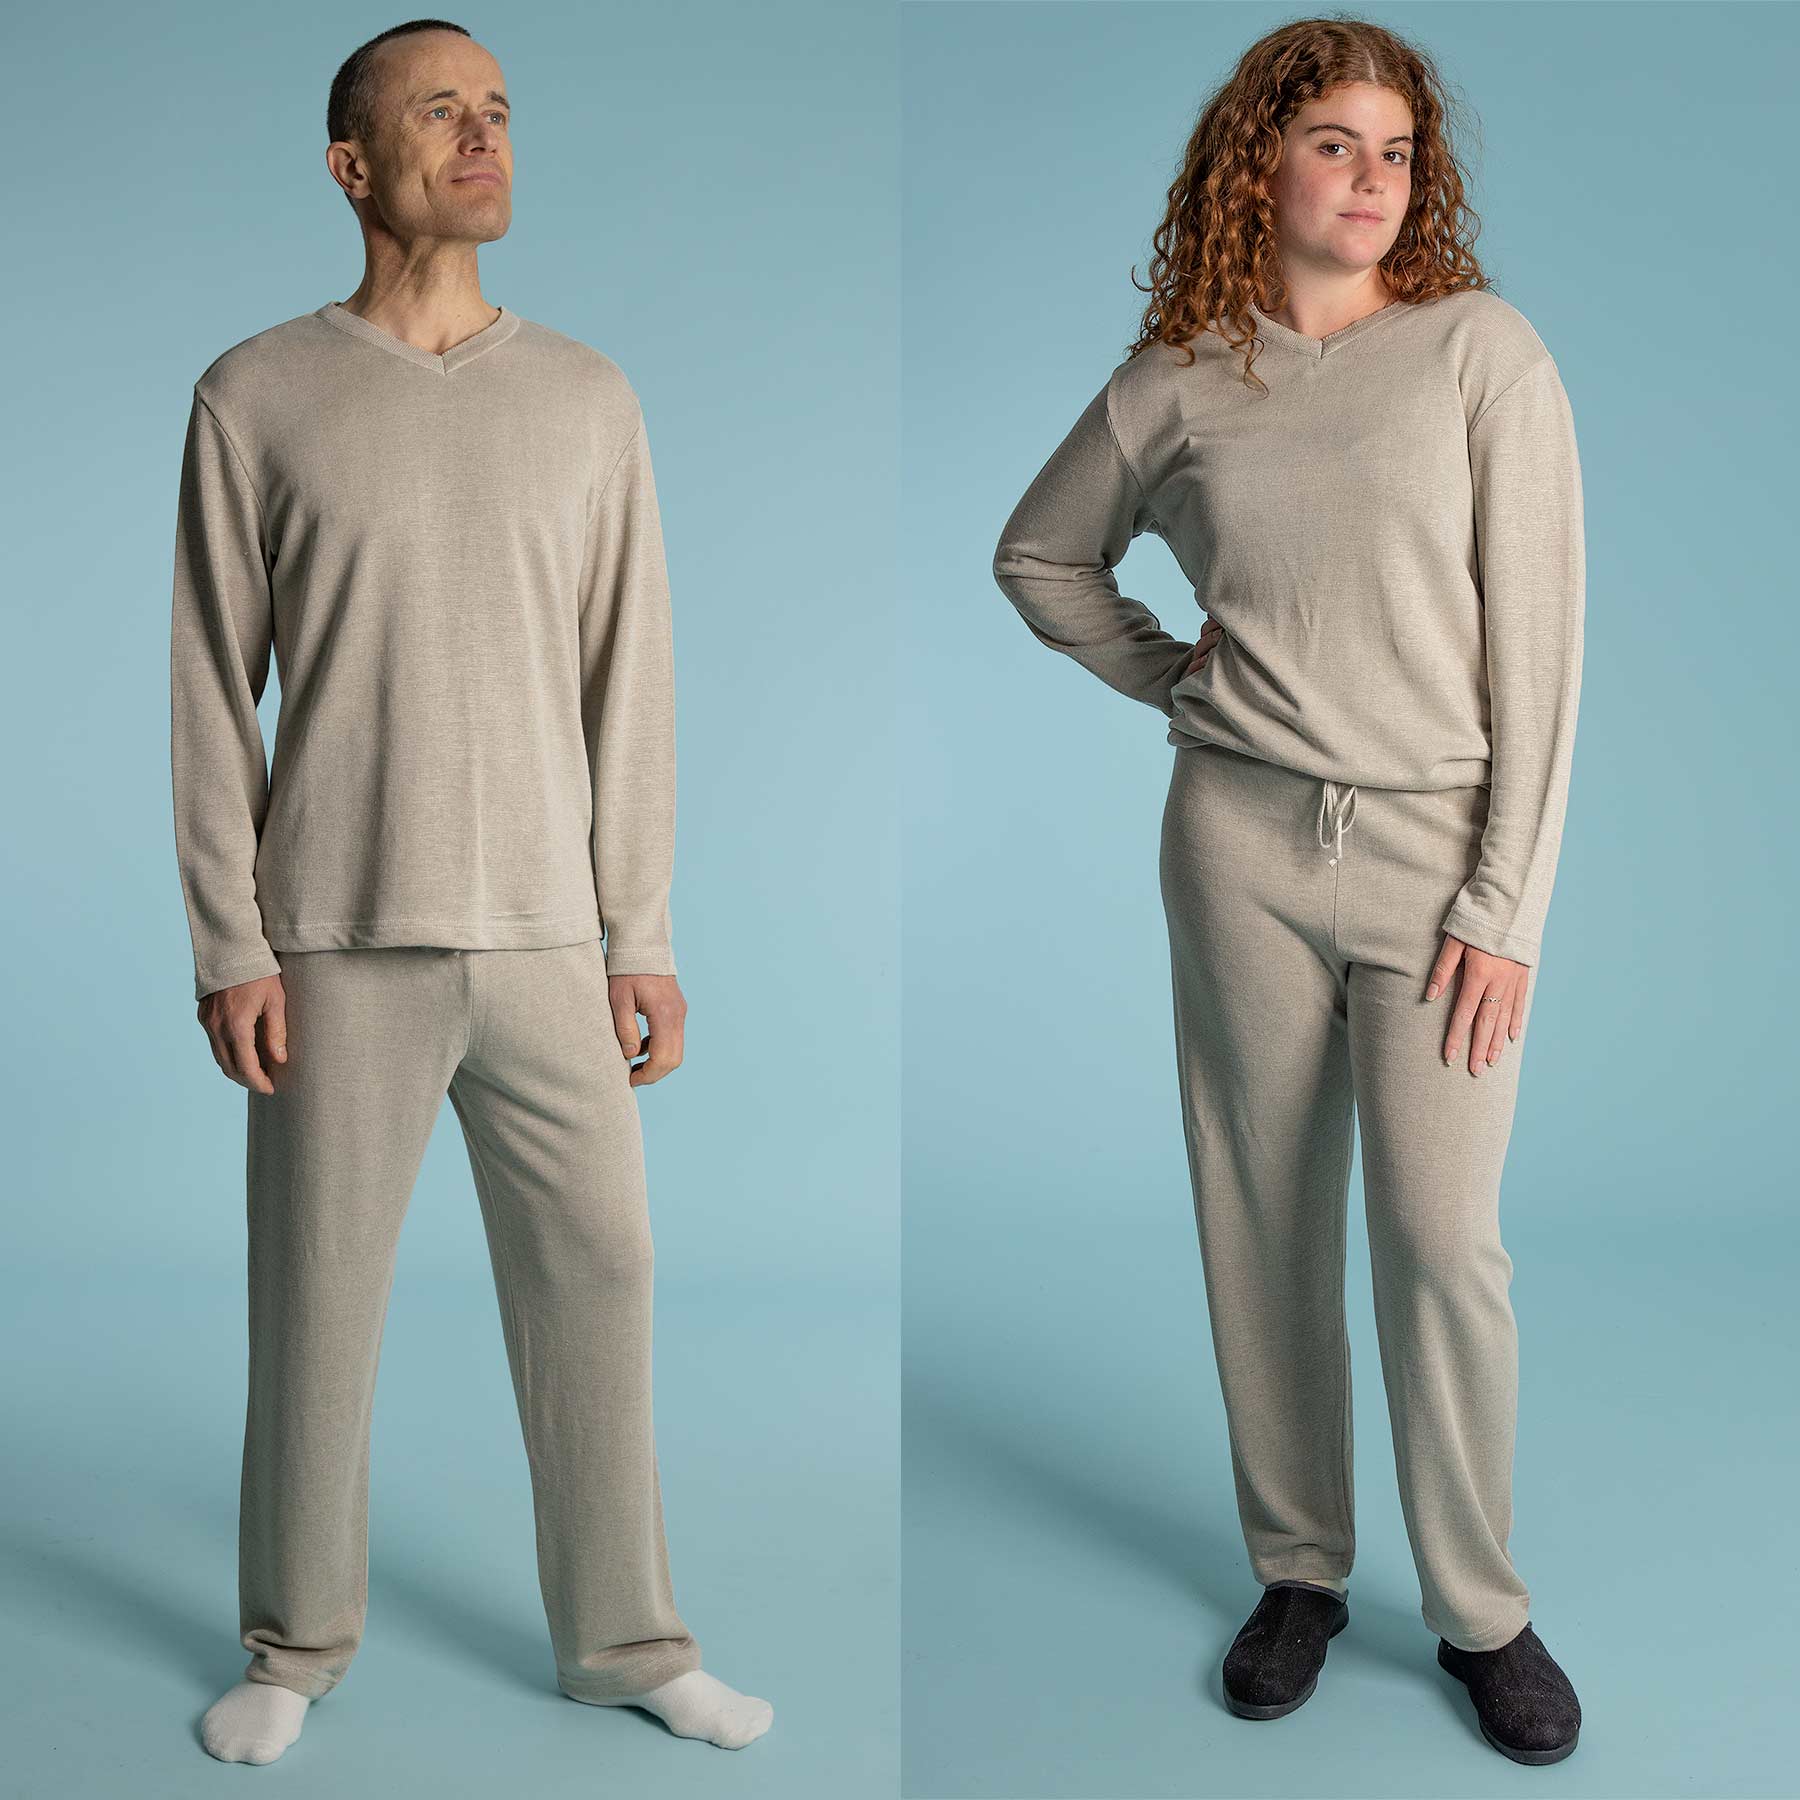 Merino Wool 100% Natural Ladies Long Pyjama Set Sleepwear Sleep